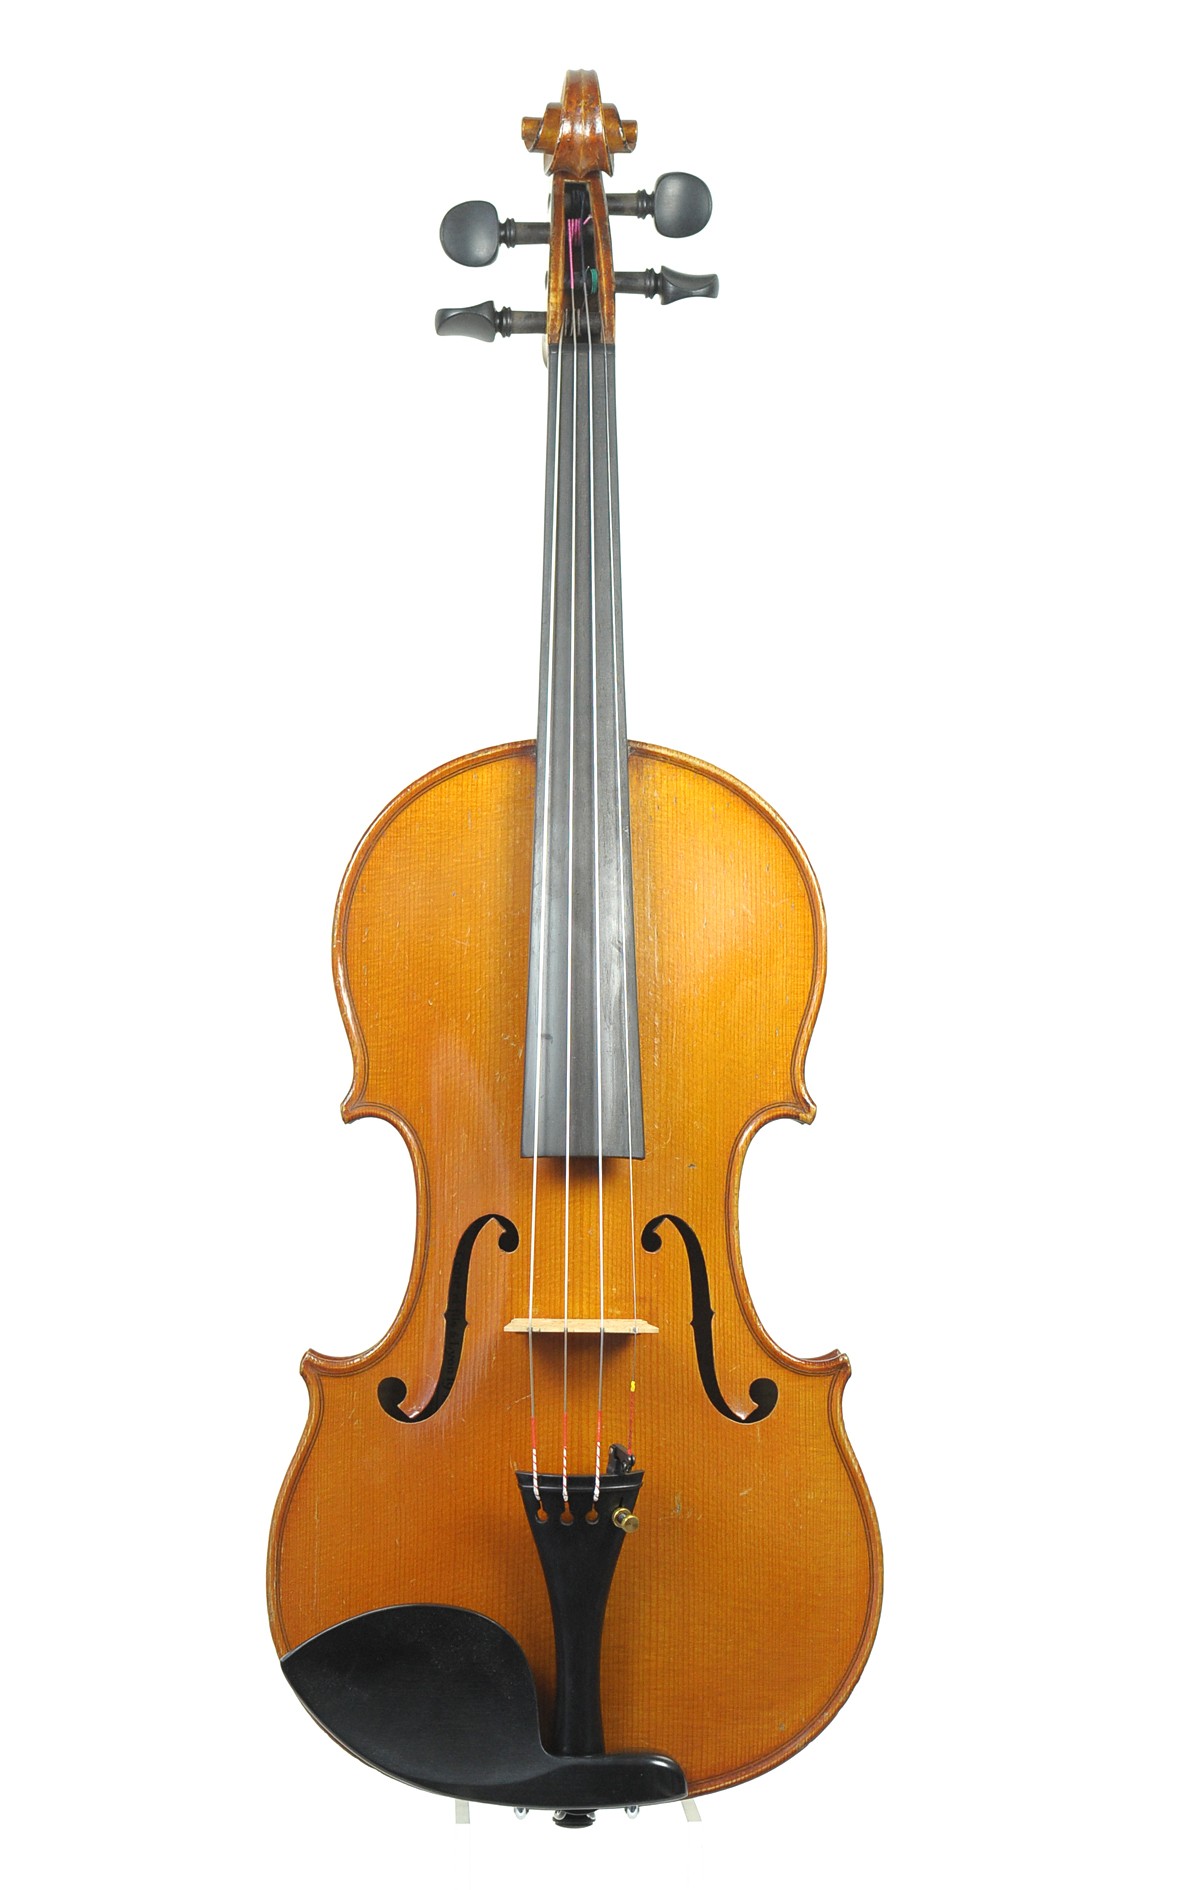  Atelier Georges Coné, Violine - Decke